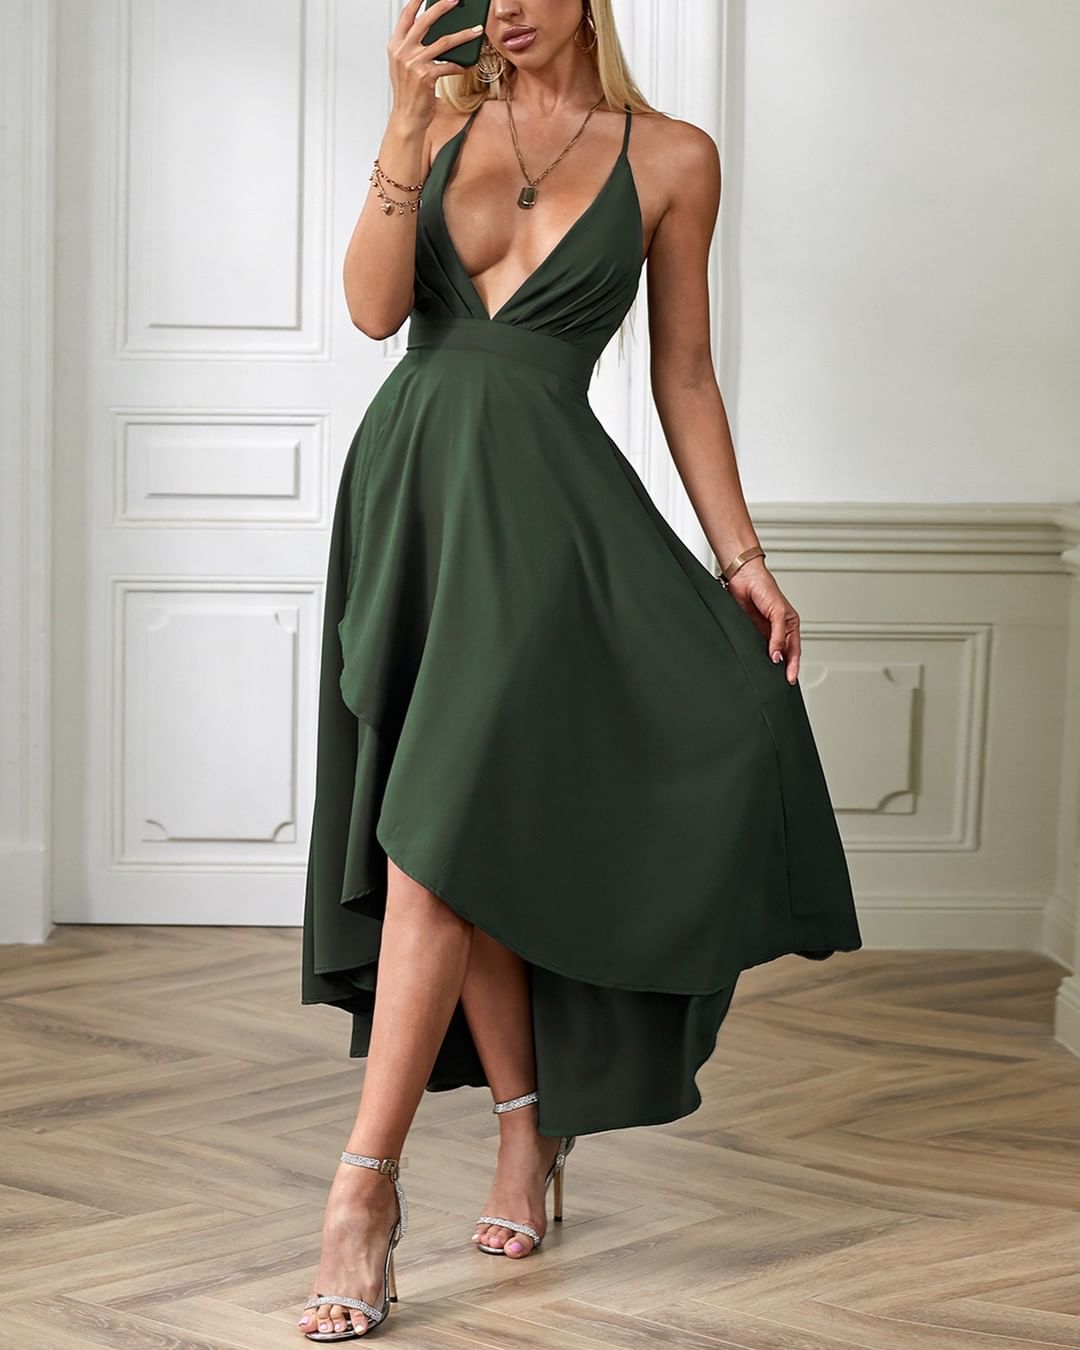 boutiquefeel_official - Deep V Asymmetric Cami Dress⁠
Search SKU:YSK3330⁠
SHOP WEB:https://www.boutiquefeel.com ⁠
 #fashion #style #summer